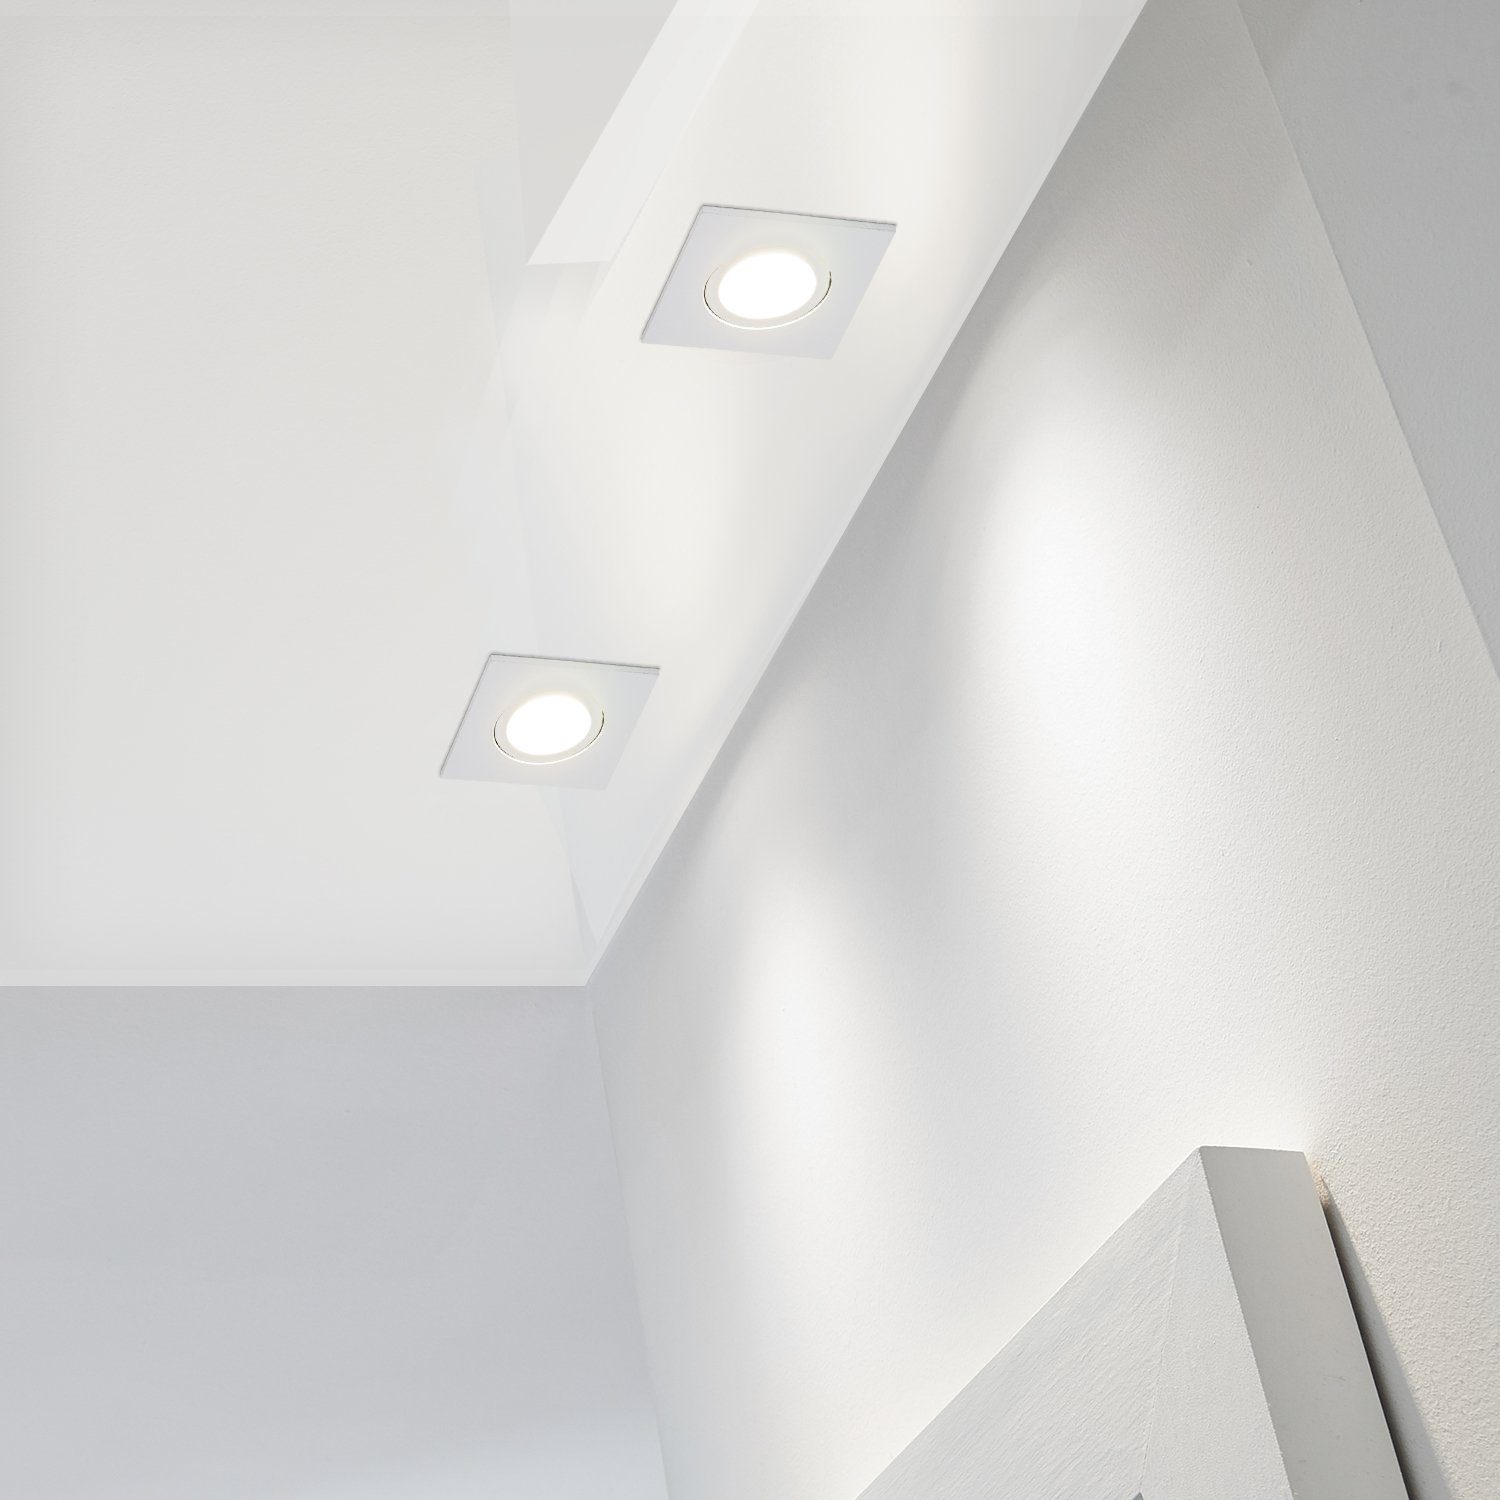 LEDANDO LED Einbaustrahler 10er RGB LED 3W extra mit LED vo weiß in flach Set matt Einbaustrahler